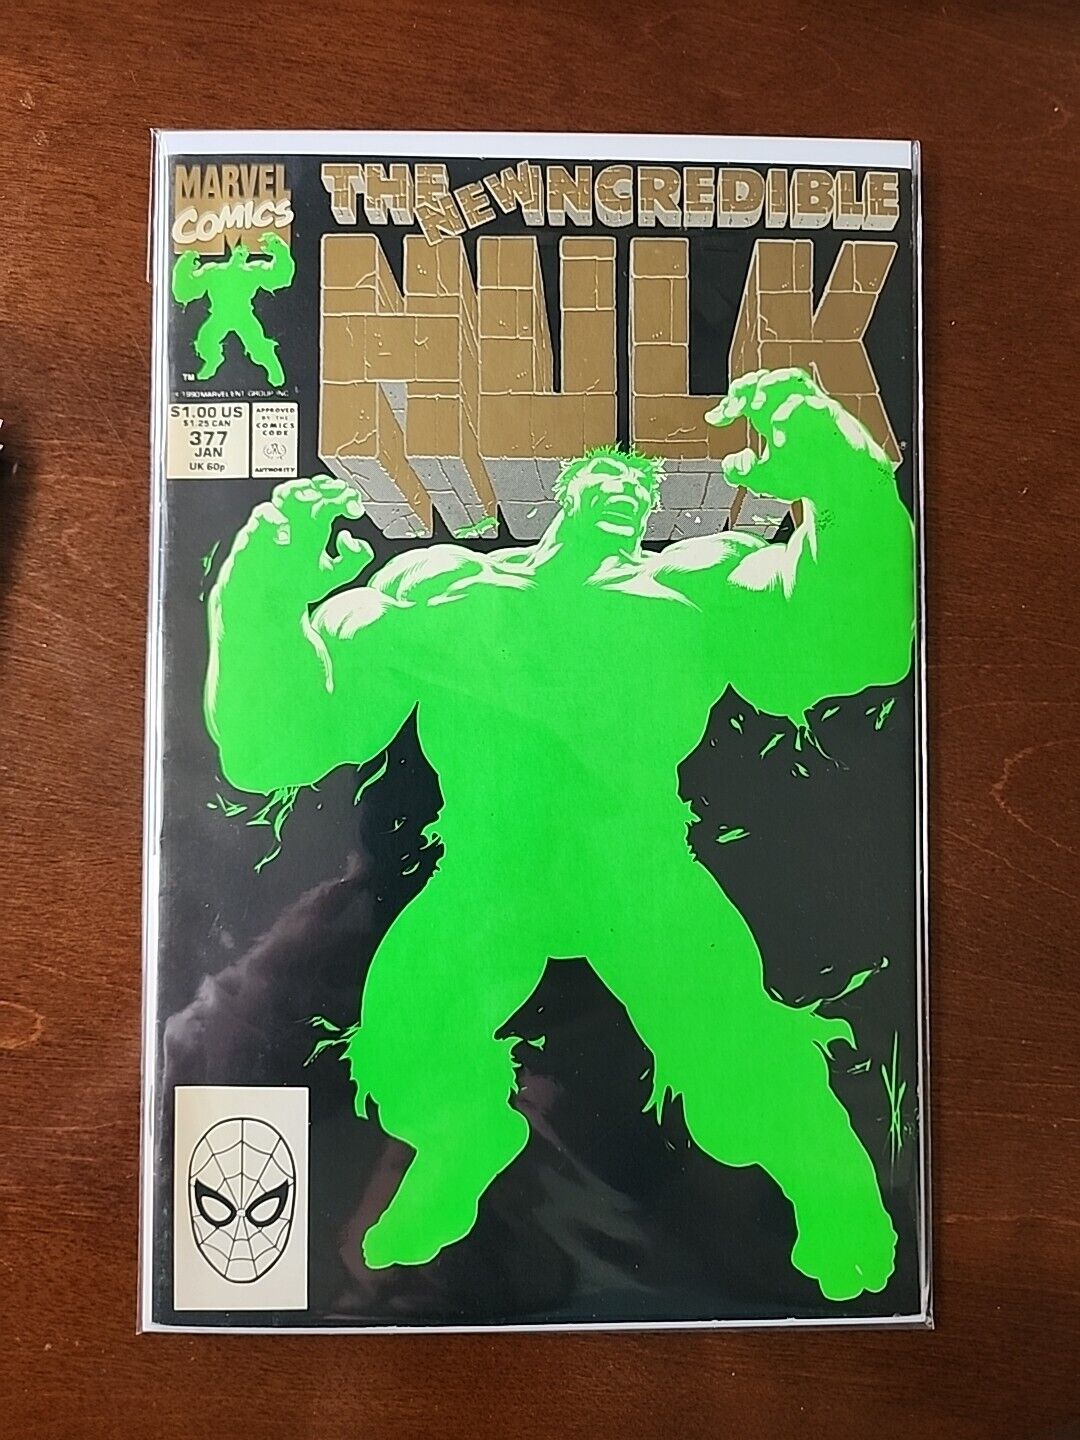 The Incredible Hulk #377, 2nd Print - Marvel Comics, 1990 - NM-